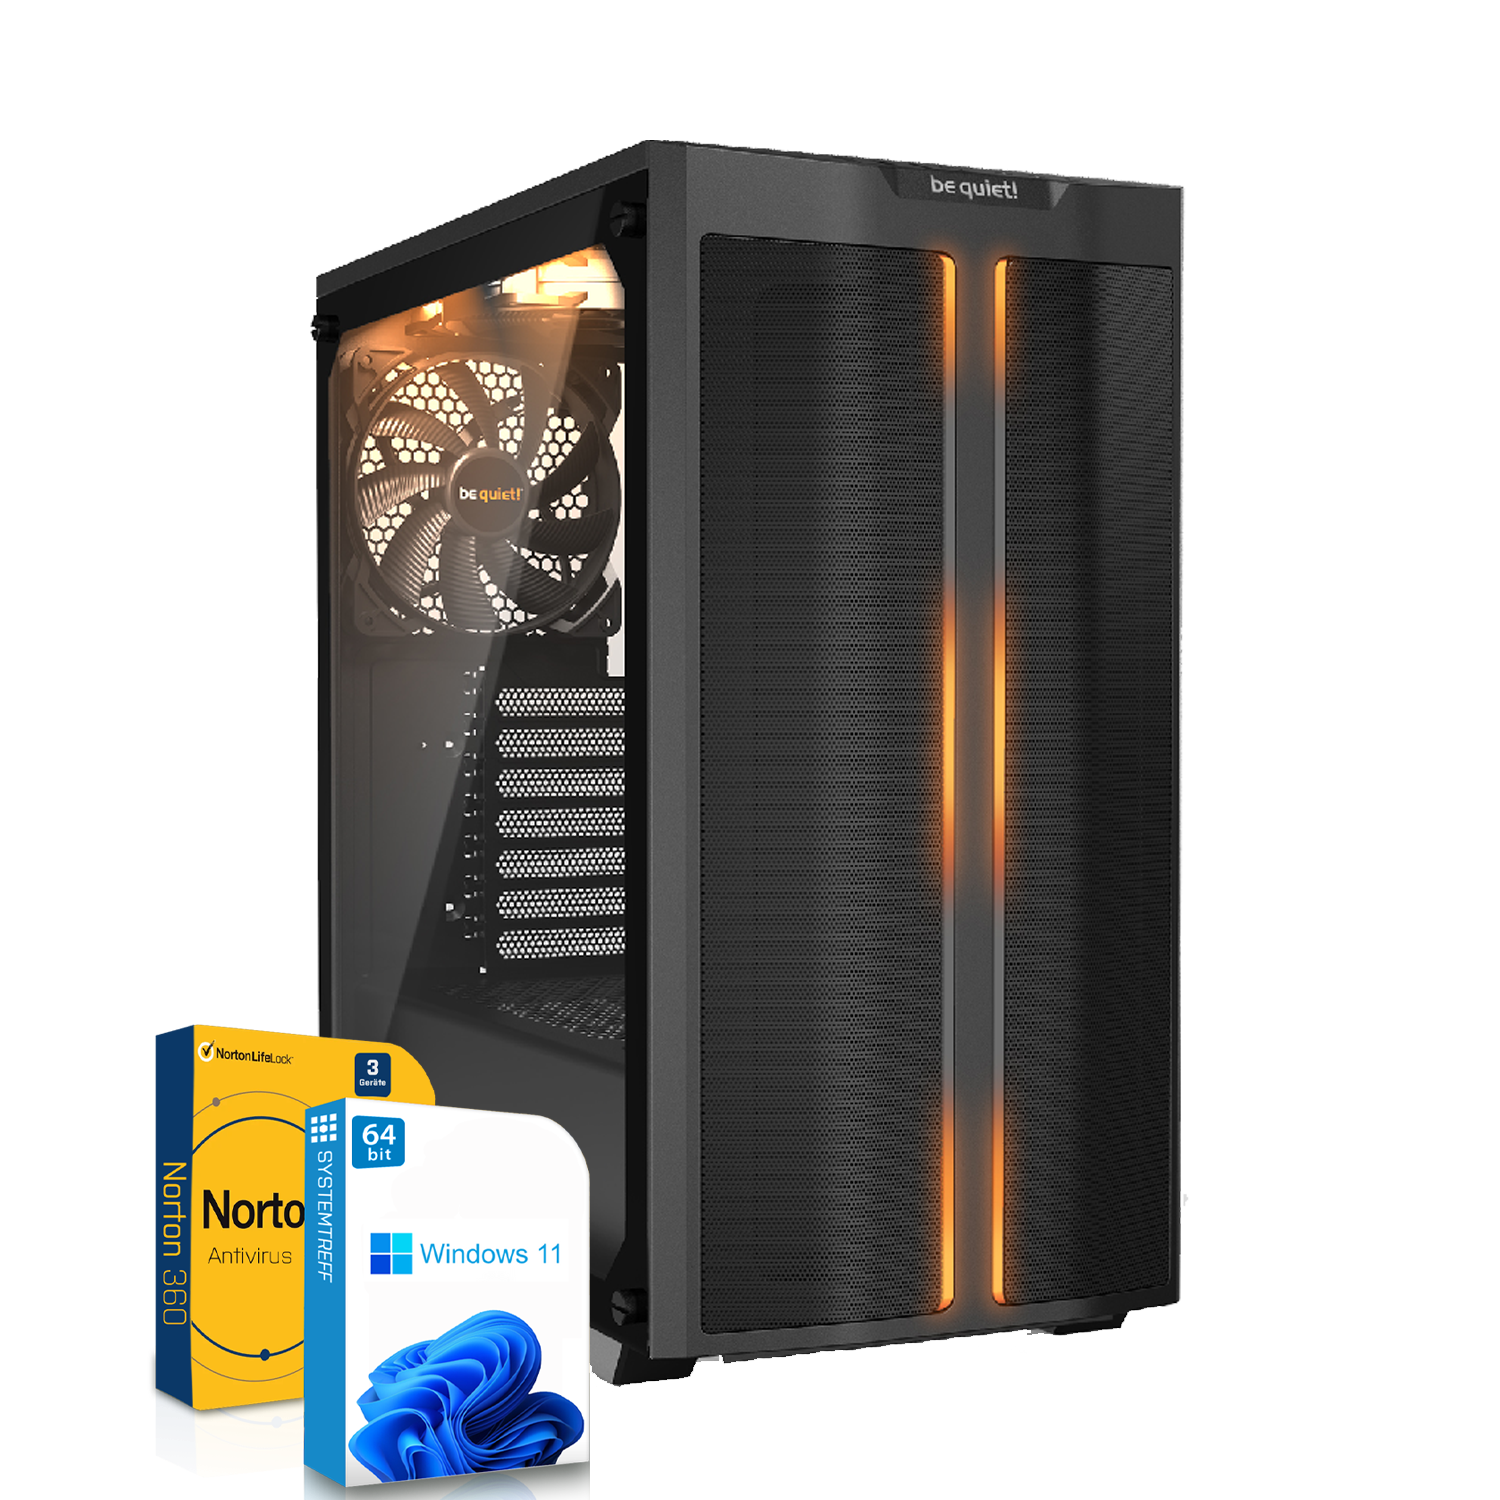 SYSTEMTREFF High-End Gaming Prozessor, 32 i9 11 mit PC Core™ 1000 Radeon™ Intel® Gaming Core Intel GB i9-12900KF, RX mSSD, Pro, XT RAM, AMD GB 6950 Windows